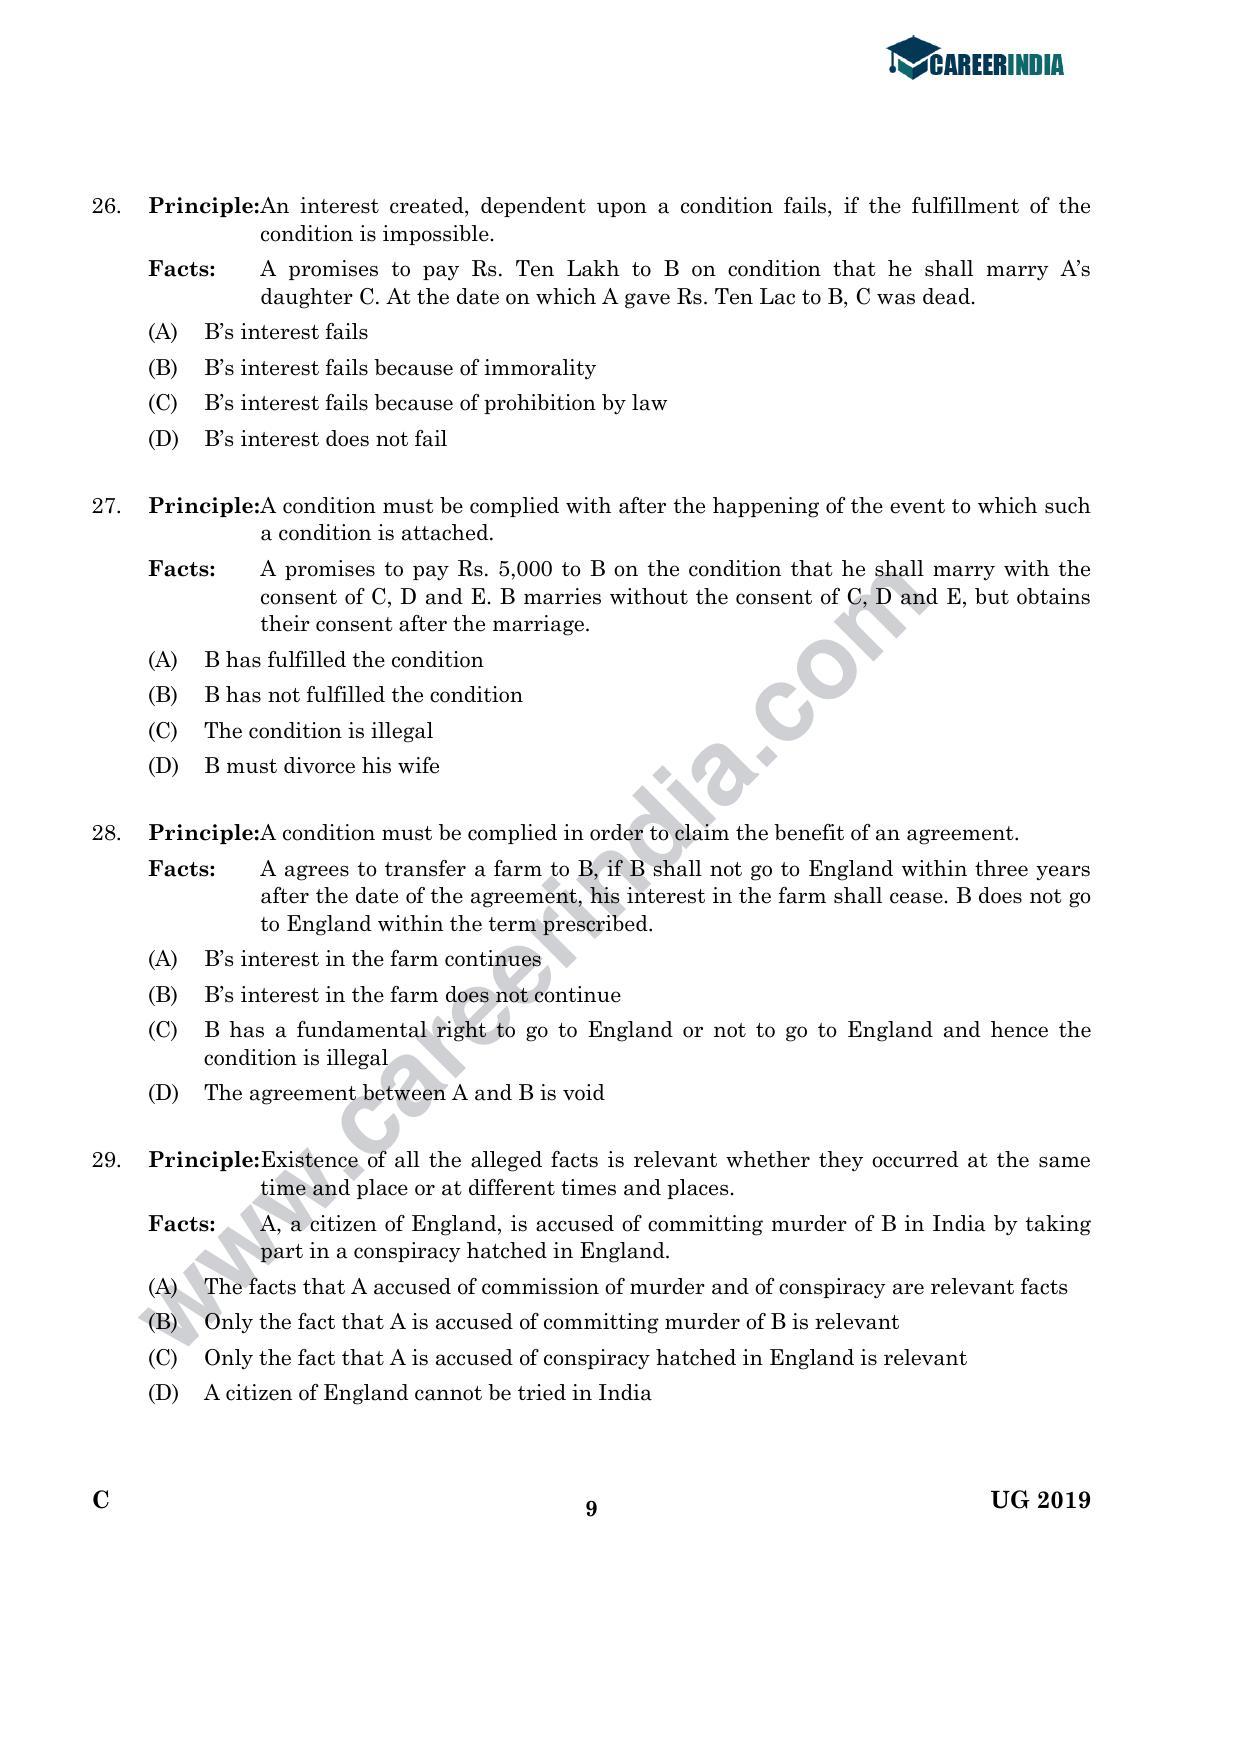 CLAT 2019 UG Legal-Aptitude Question Paper - Page 8